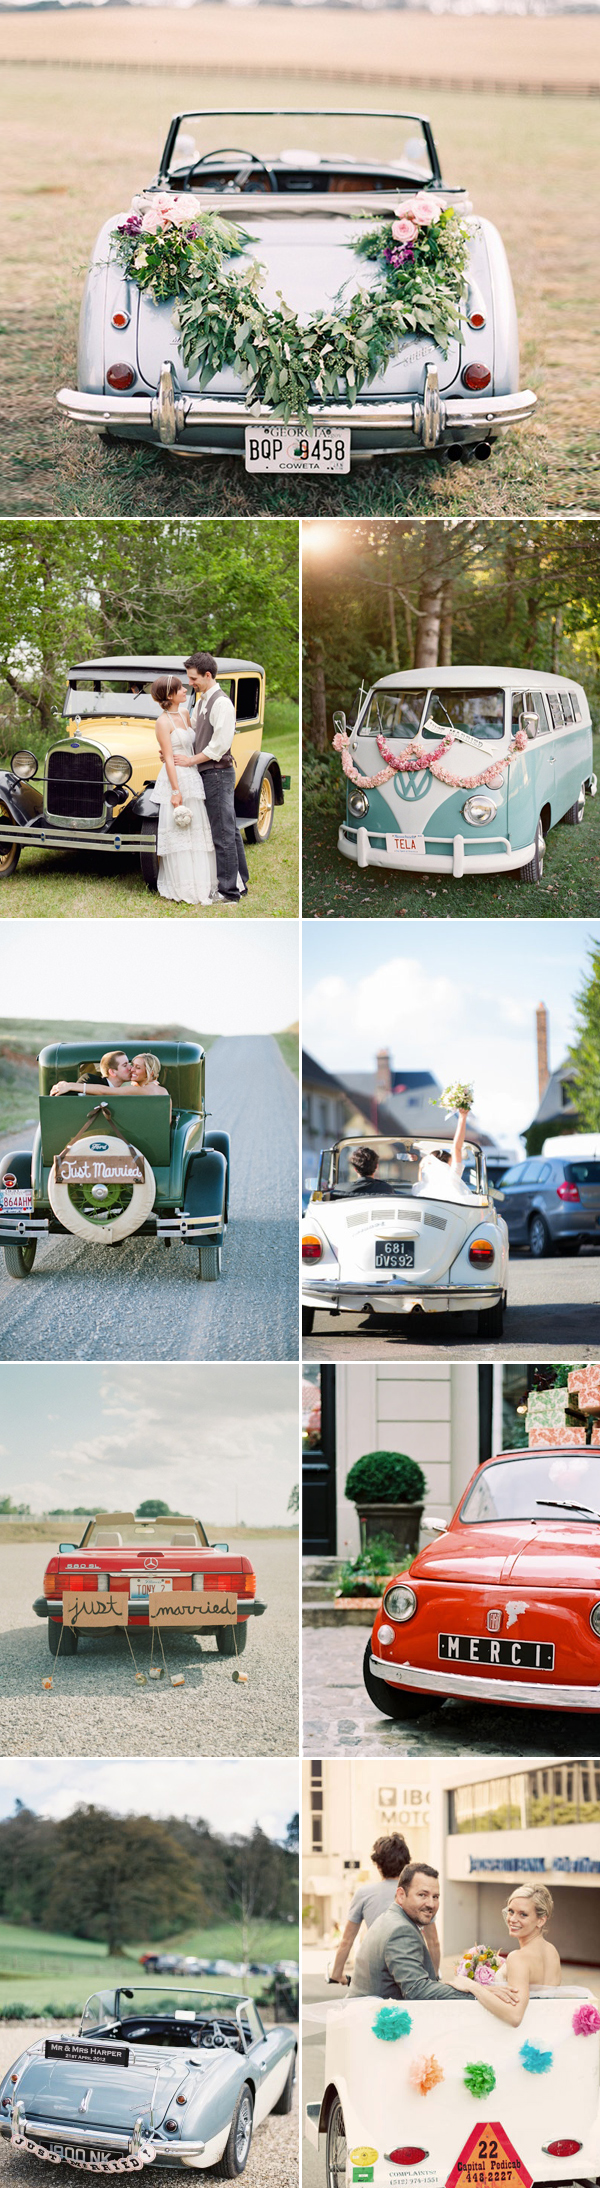 02-vintage wedding cars